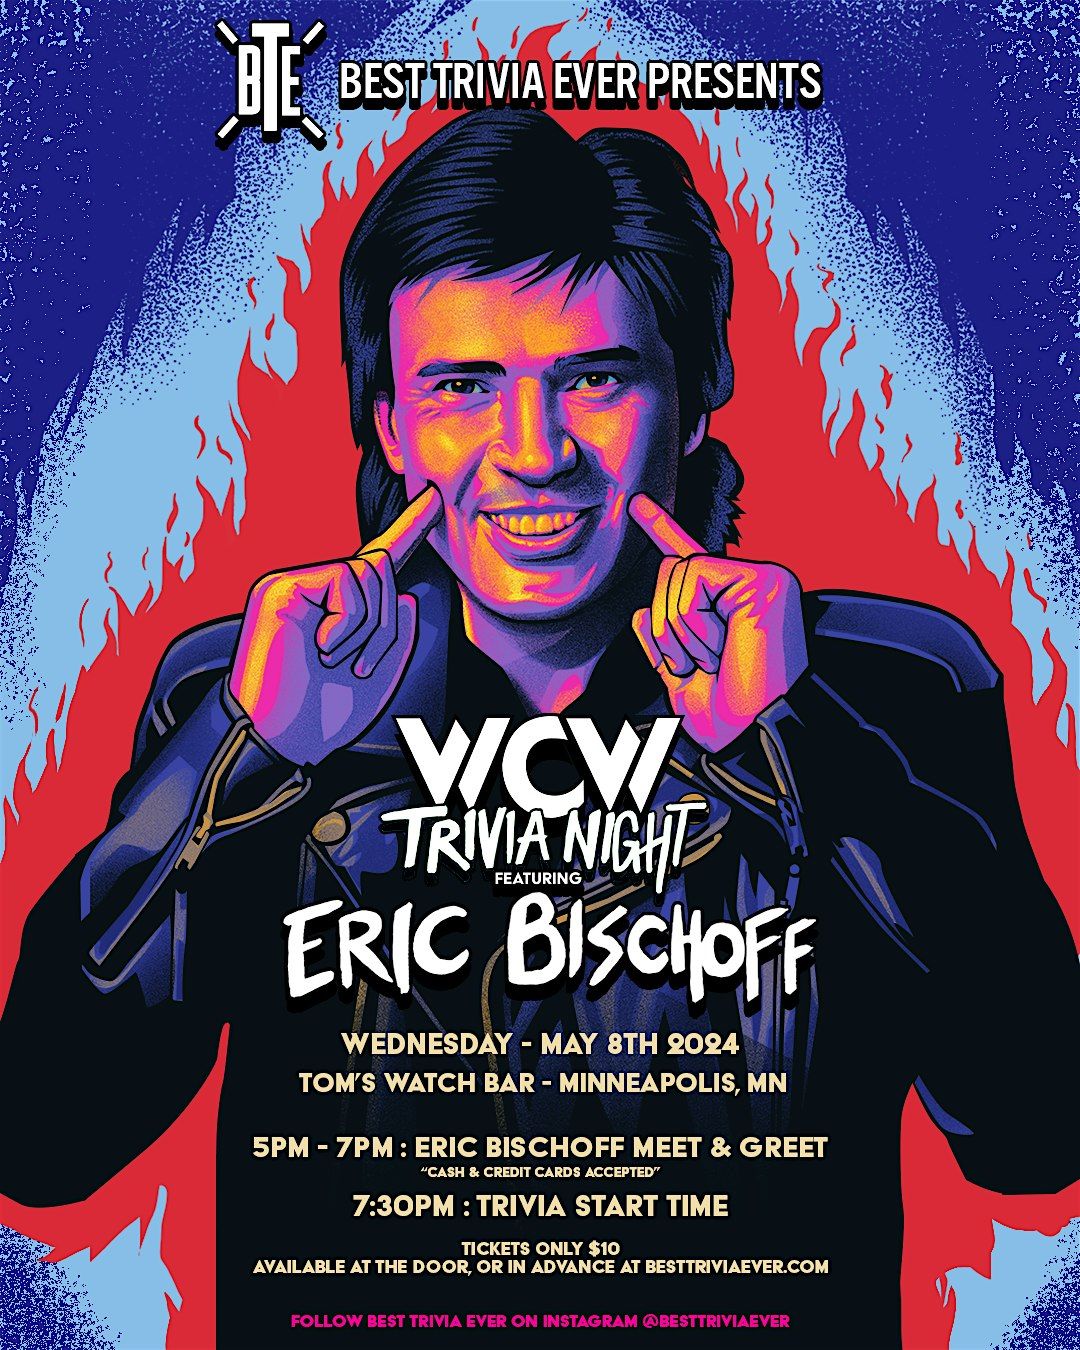 WCW Trivia Night featuring Eric Bischoff